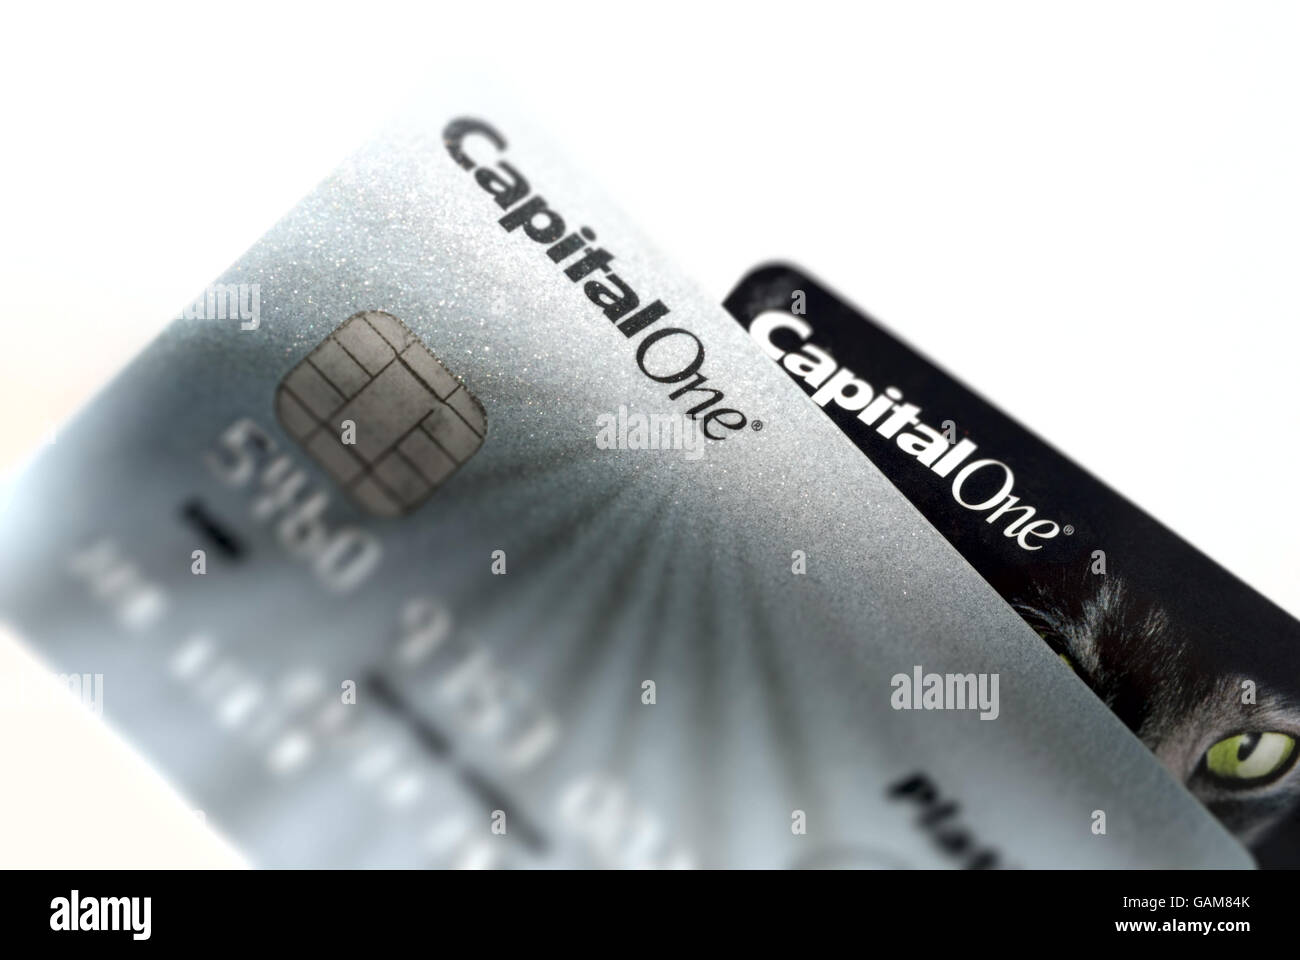 capital-one-credit-card-capital-one-credit-cards-stock-photo-alamy